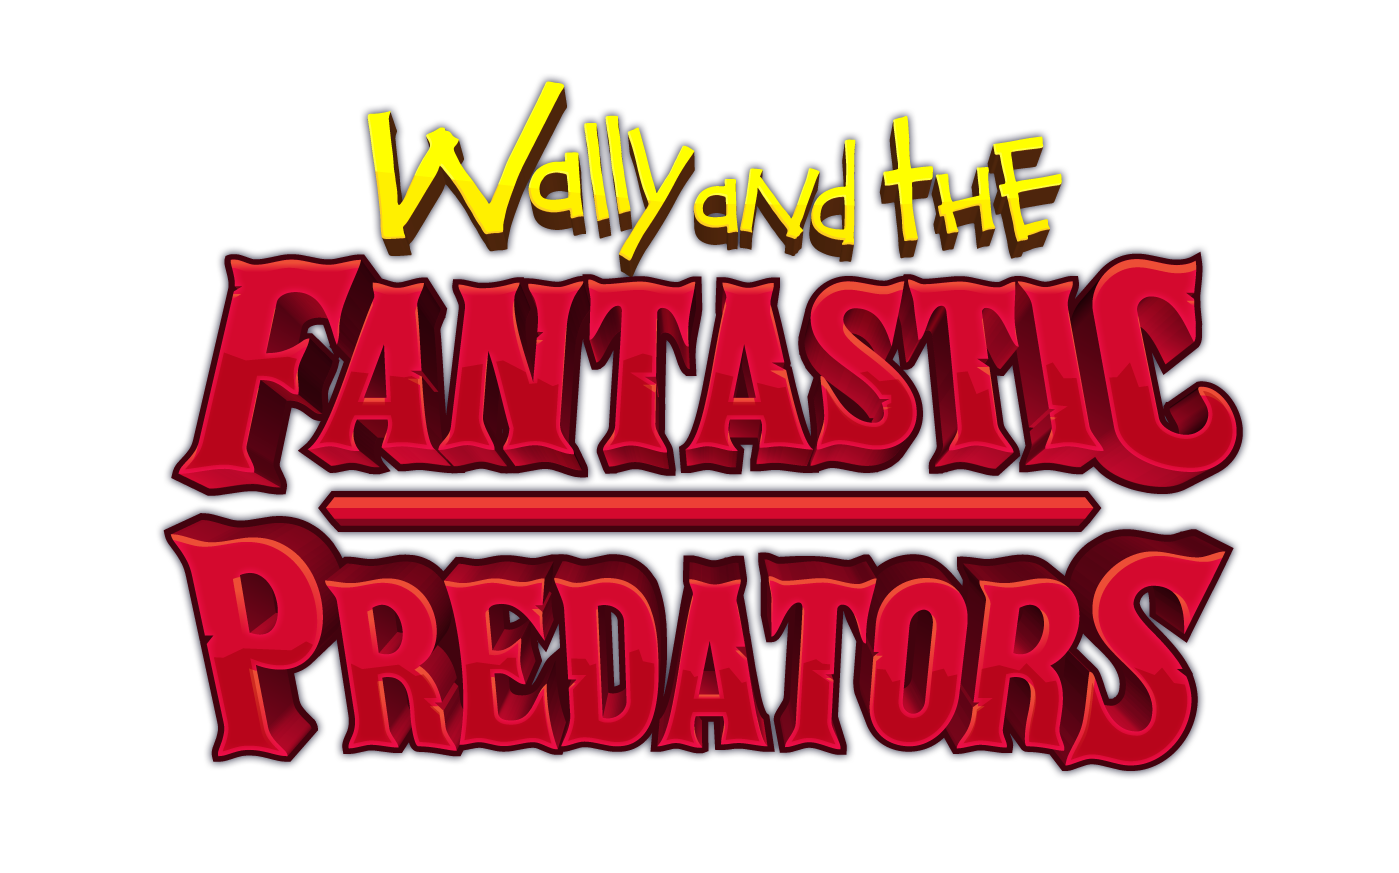 [2019 DEMO] Wally and the FANTASTIC PREDATORS